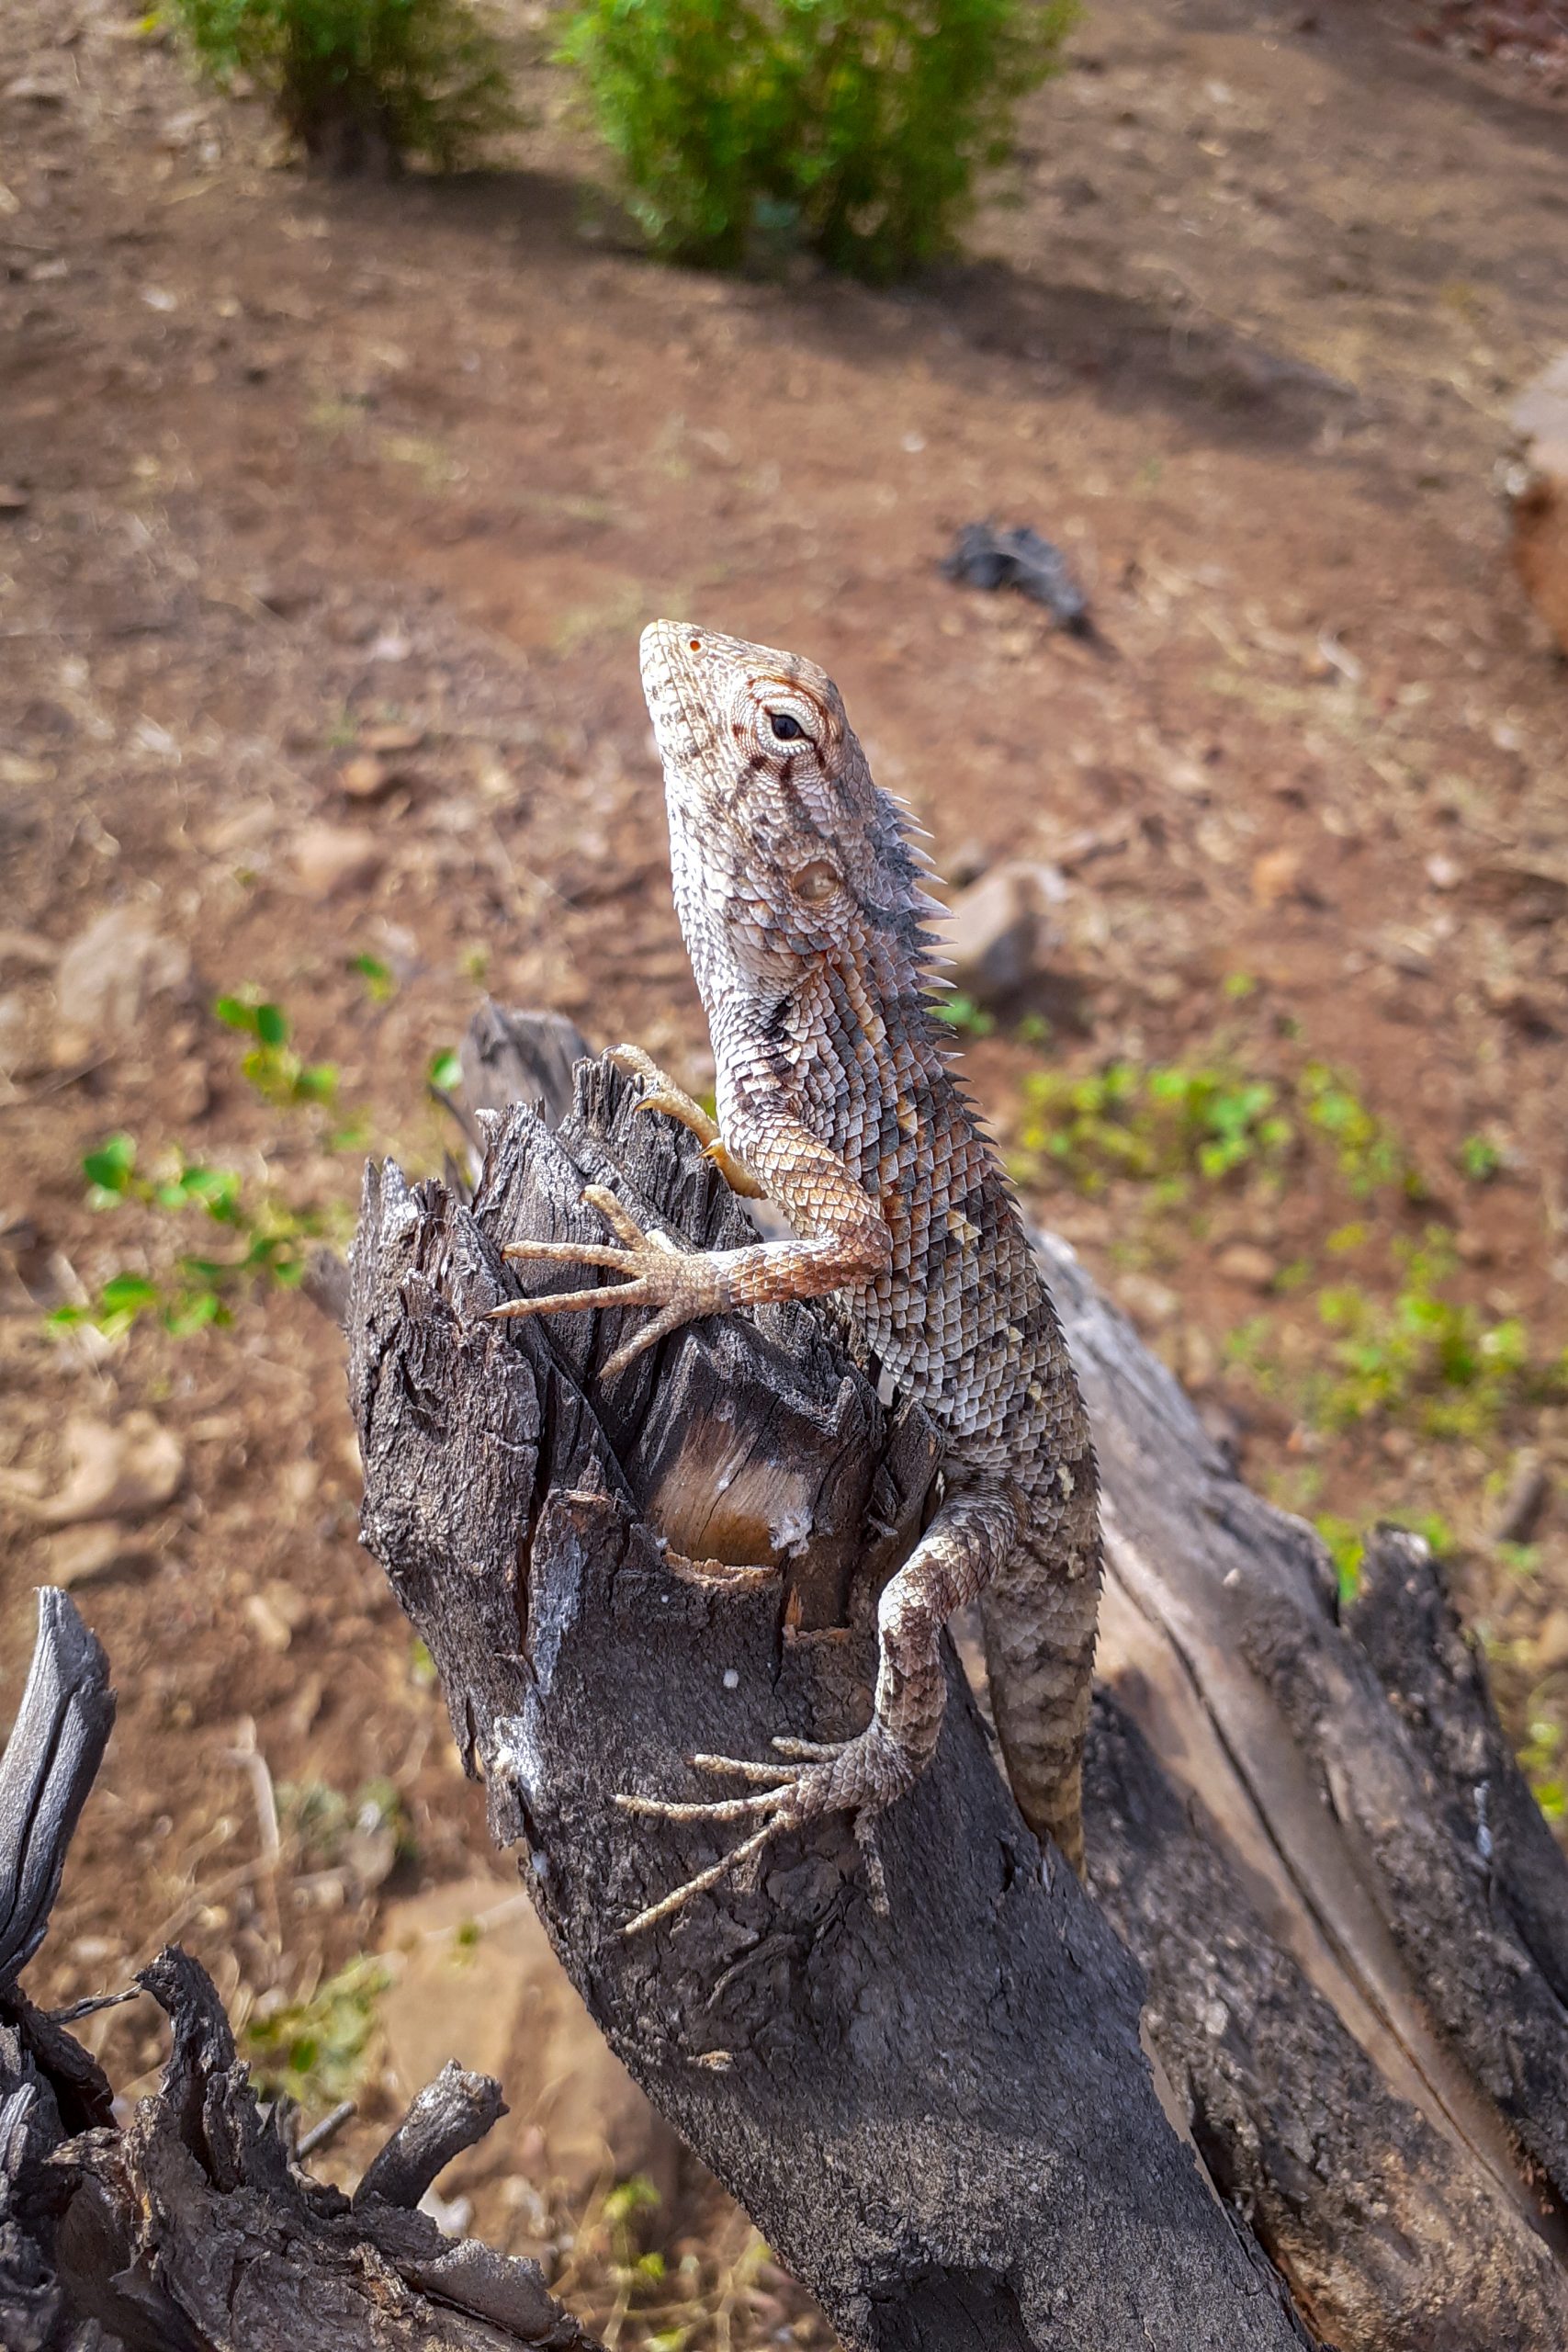 Wild Lizard on dry wood